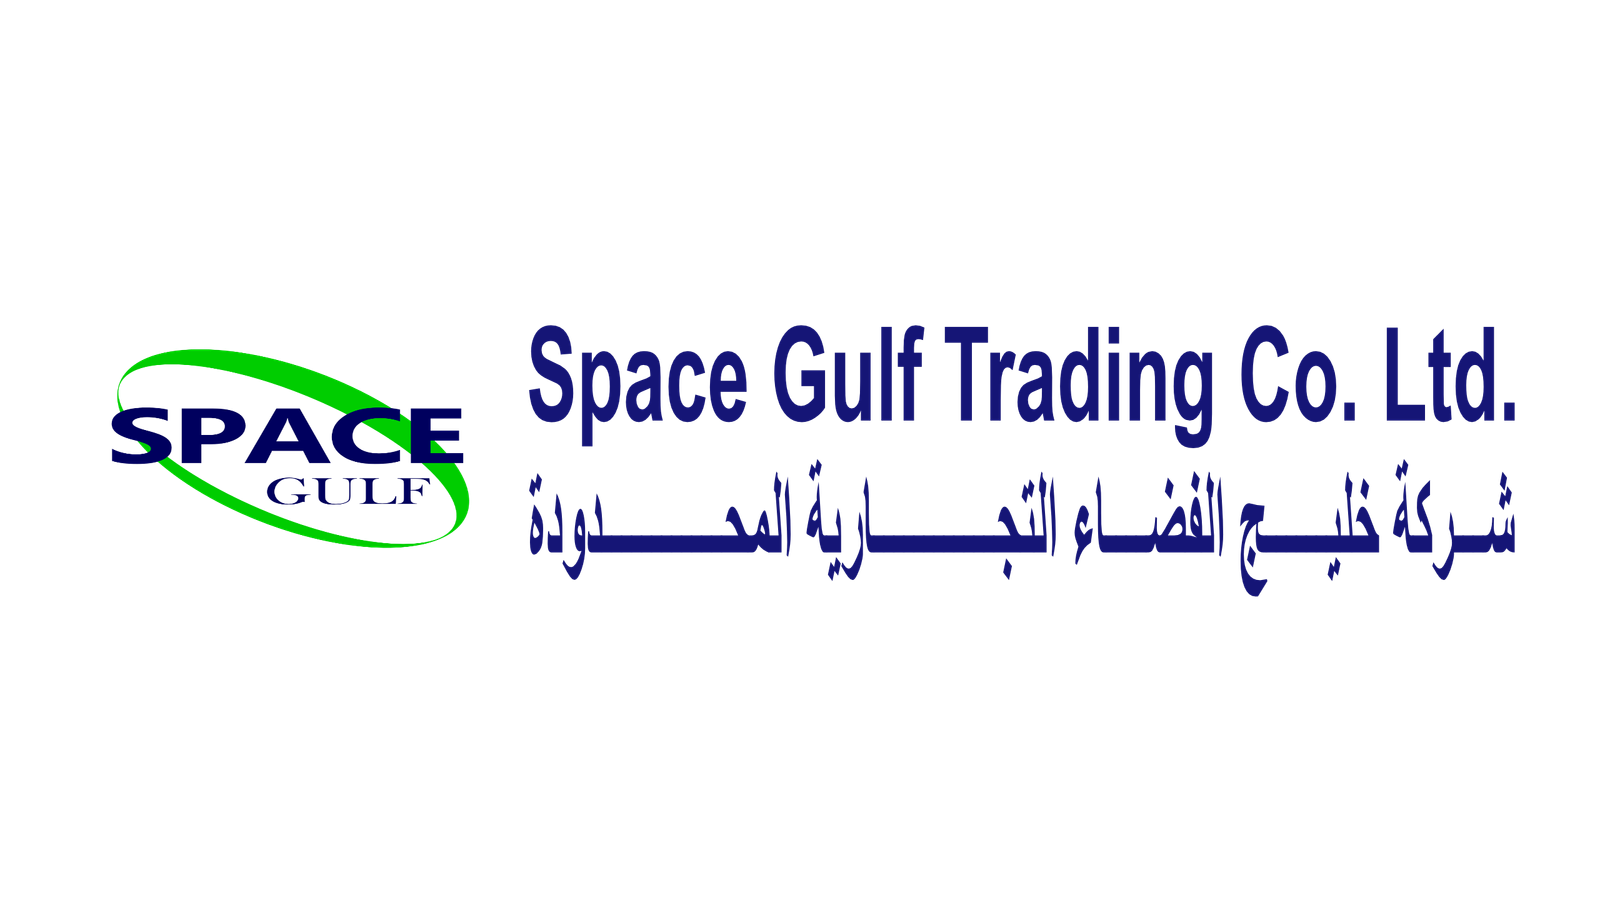 Space Gulf Trading Company Ltd